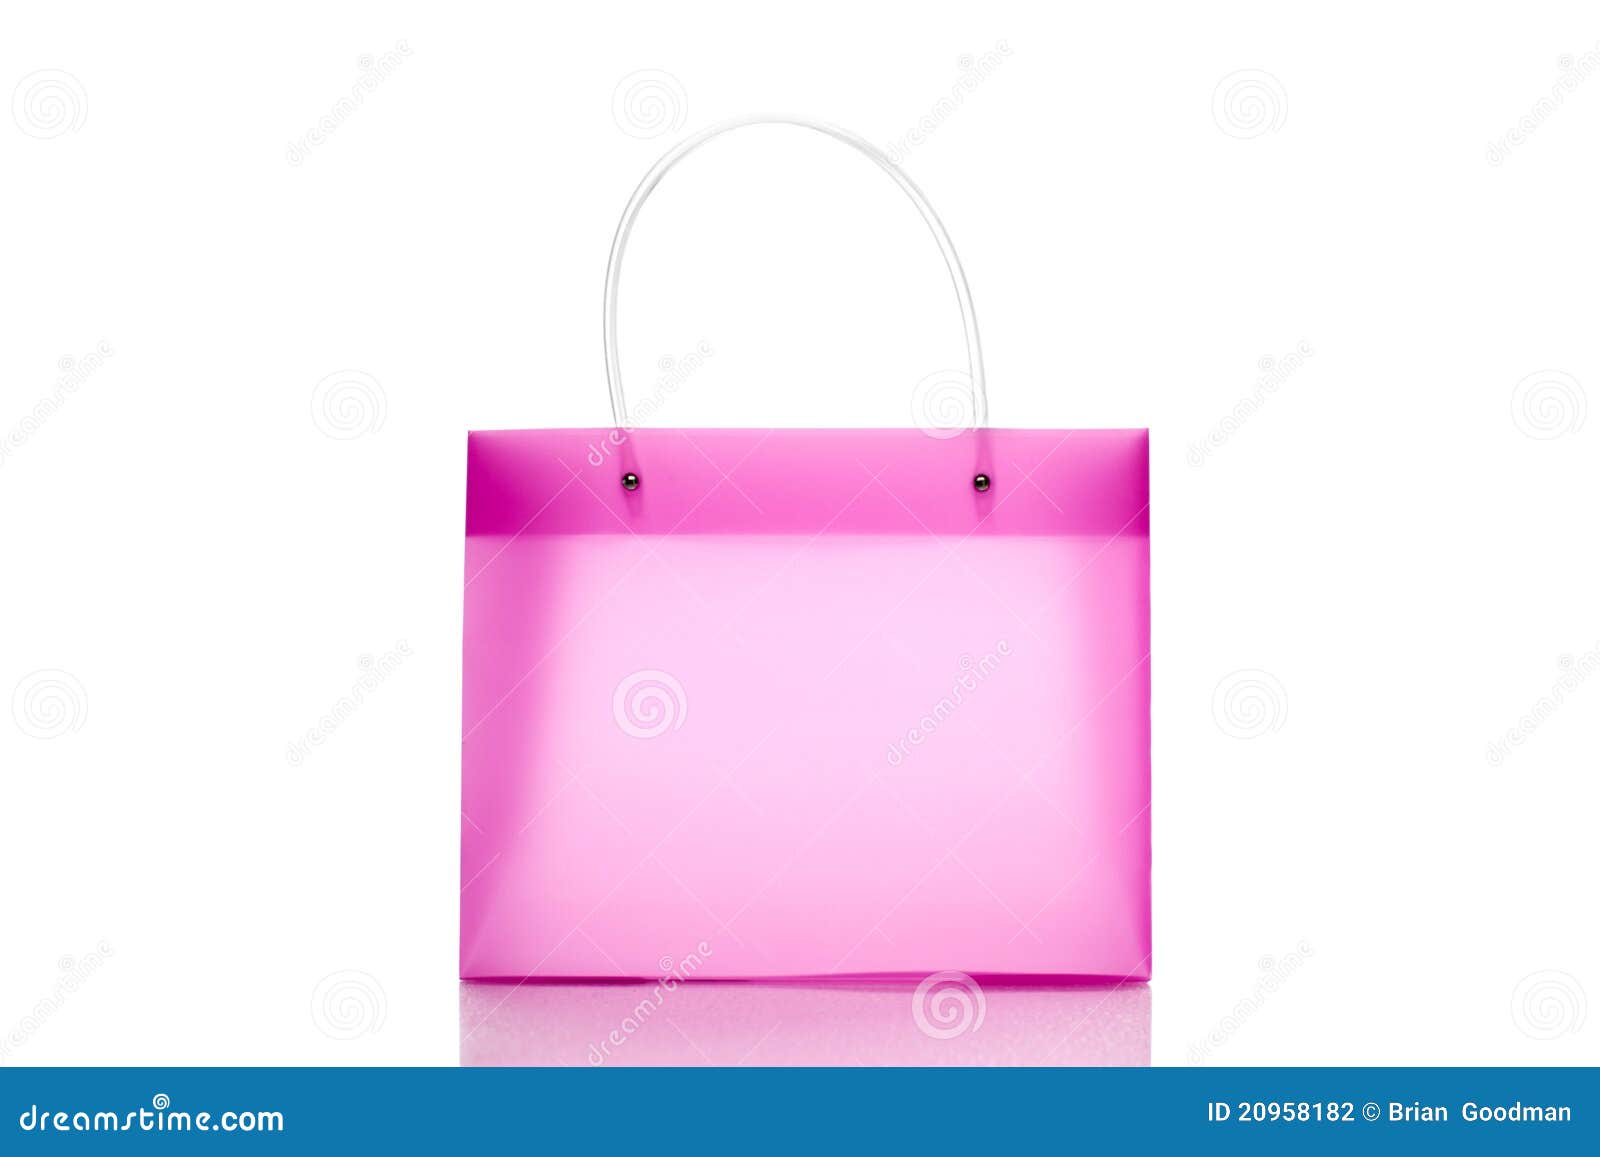 Shopping bag stock photo. Image of sale, merchandise - 20958182